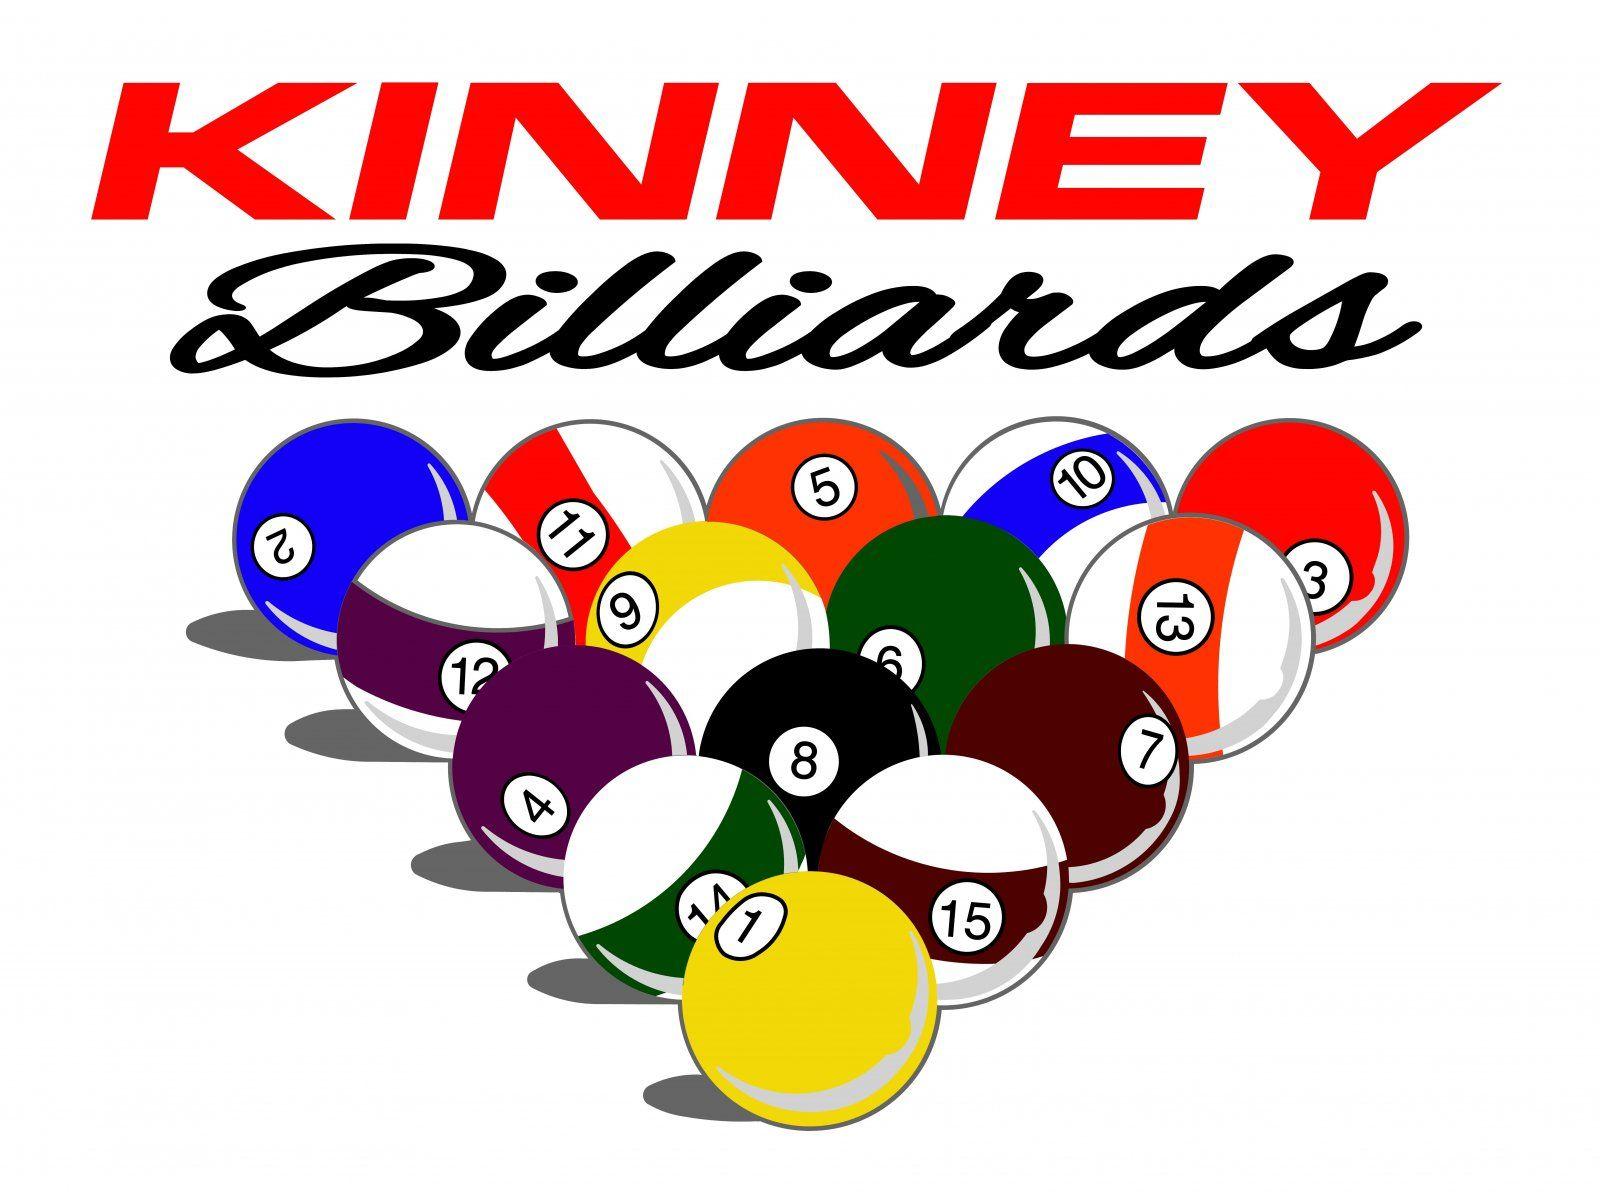 Billiards Logo - Kinney Billiards for Humanity